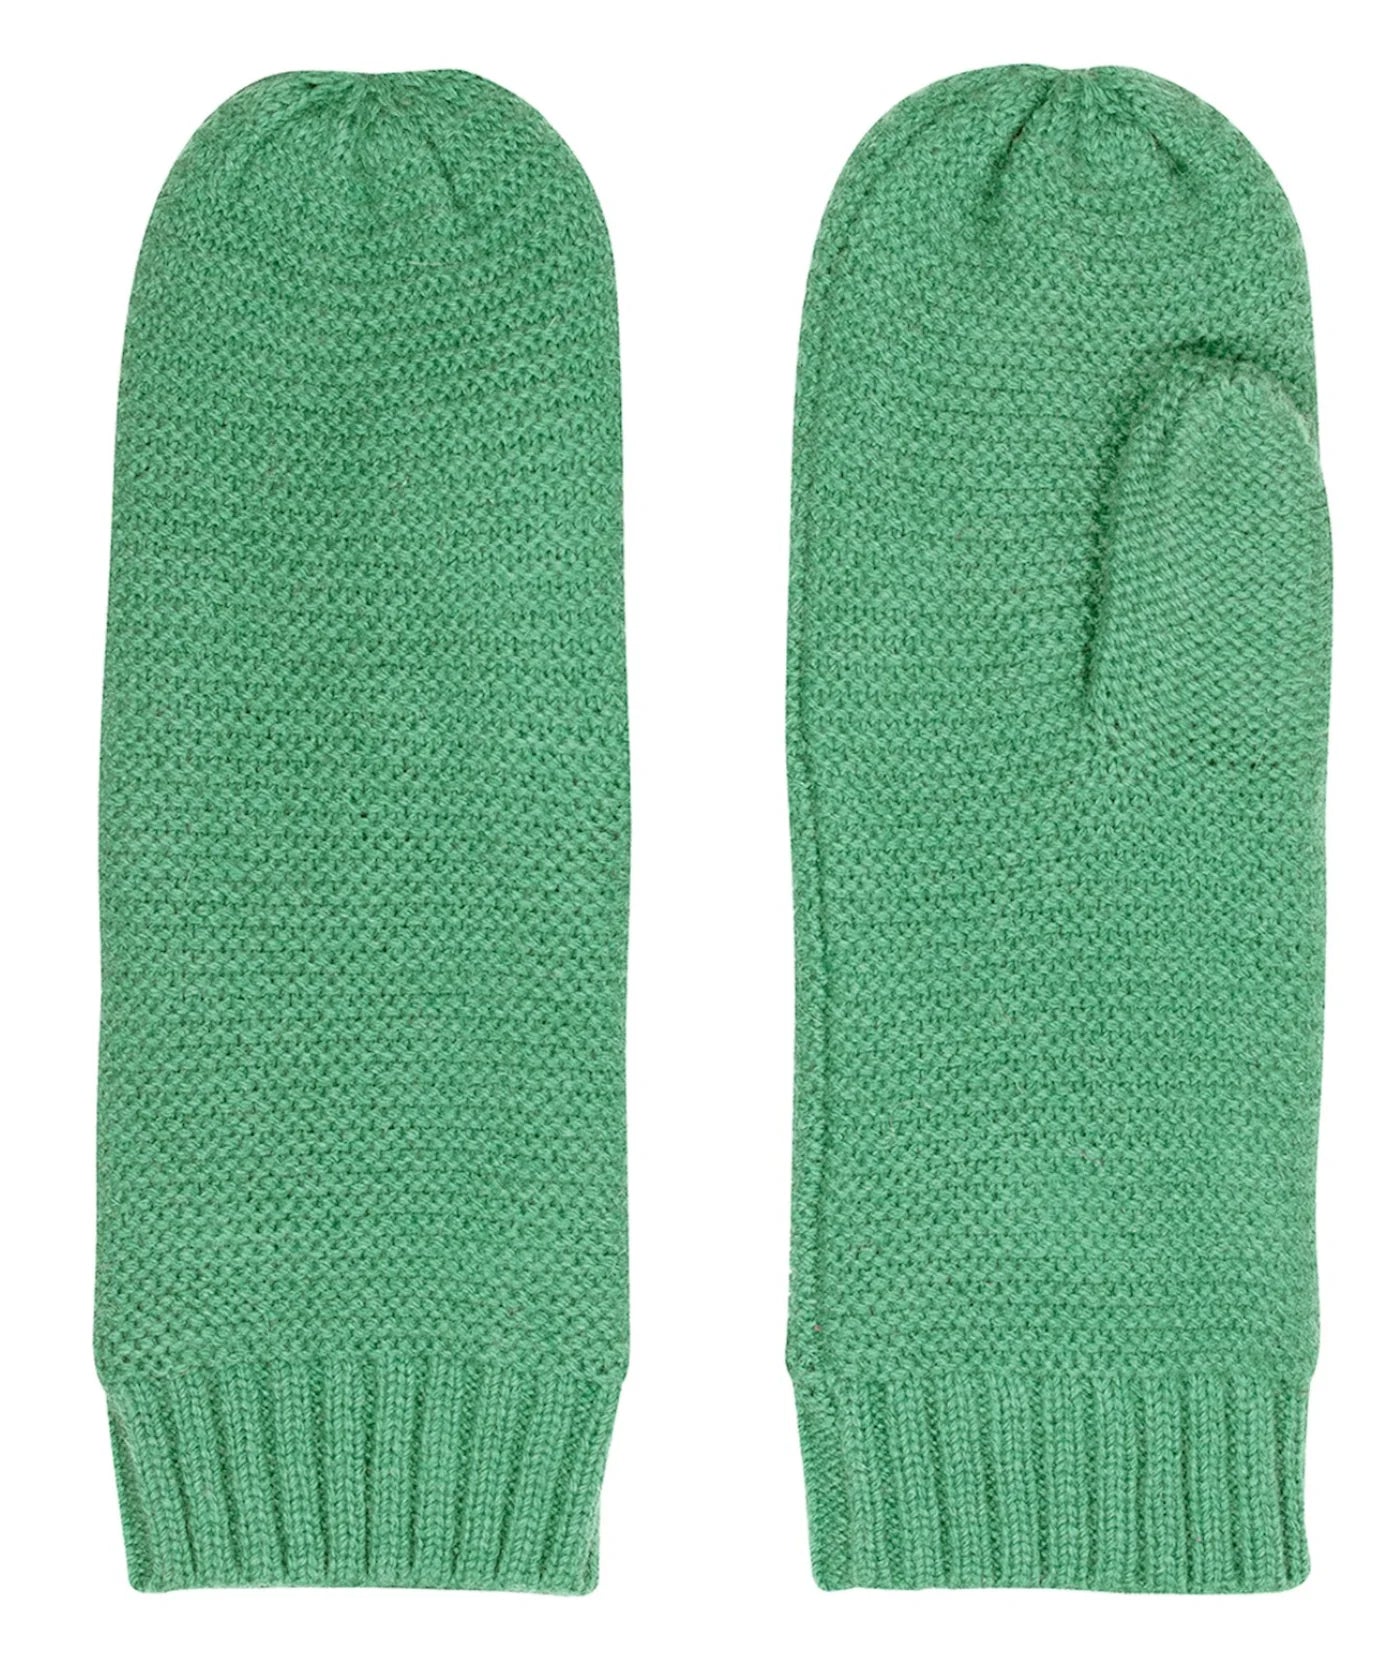 Gloves - Jade